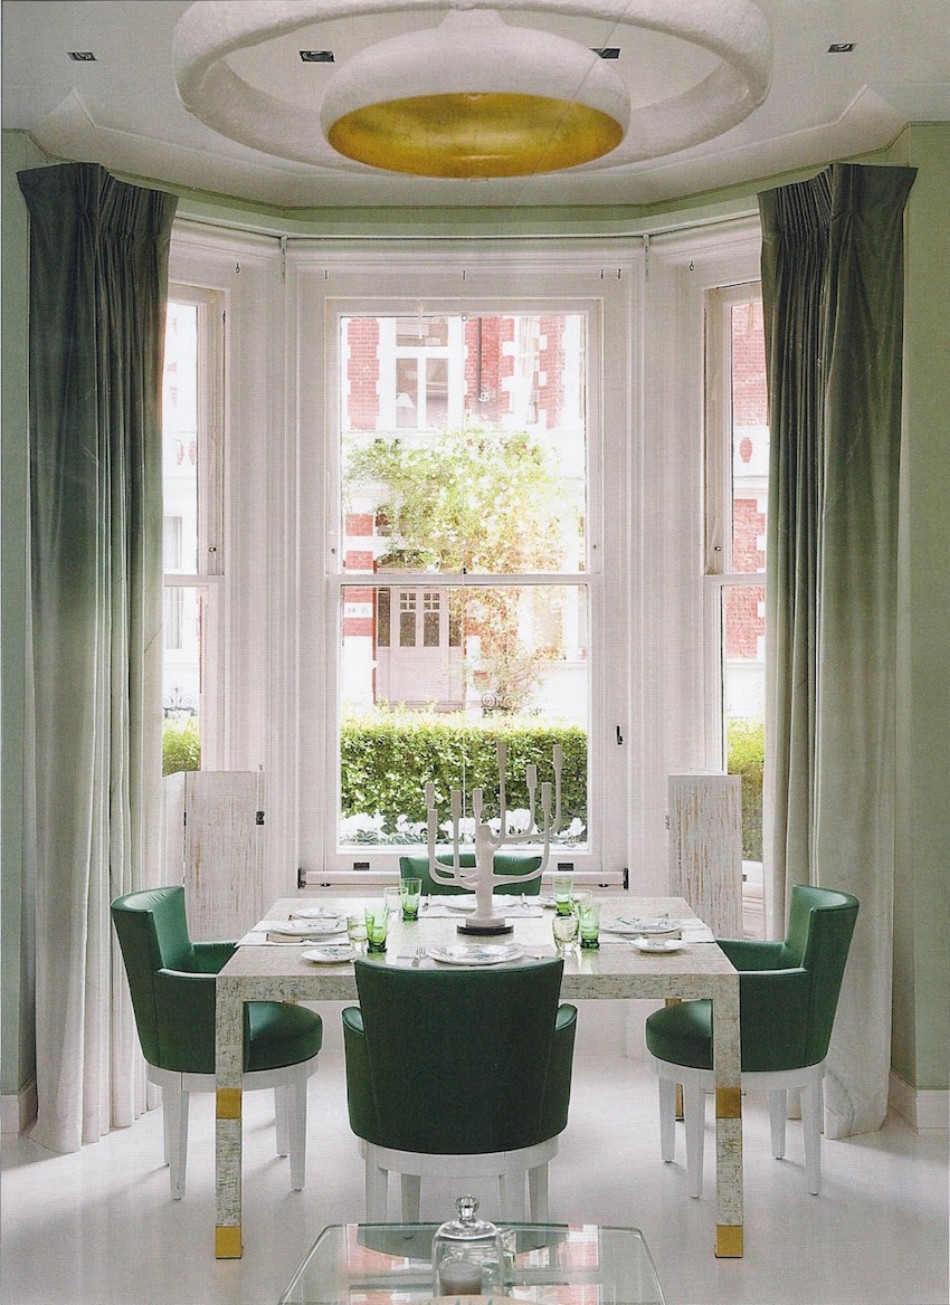 Stunning Dining Room Inspirations by Collins | www.bocadolobo.com #interiordesigner #bestinteriordesigners #topinteriordesigners #diningroom #thediningroom #diningroomdesign #diningtable #moderndiningtable #famousinteriordesigners @moderndiningtables